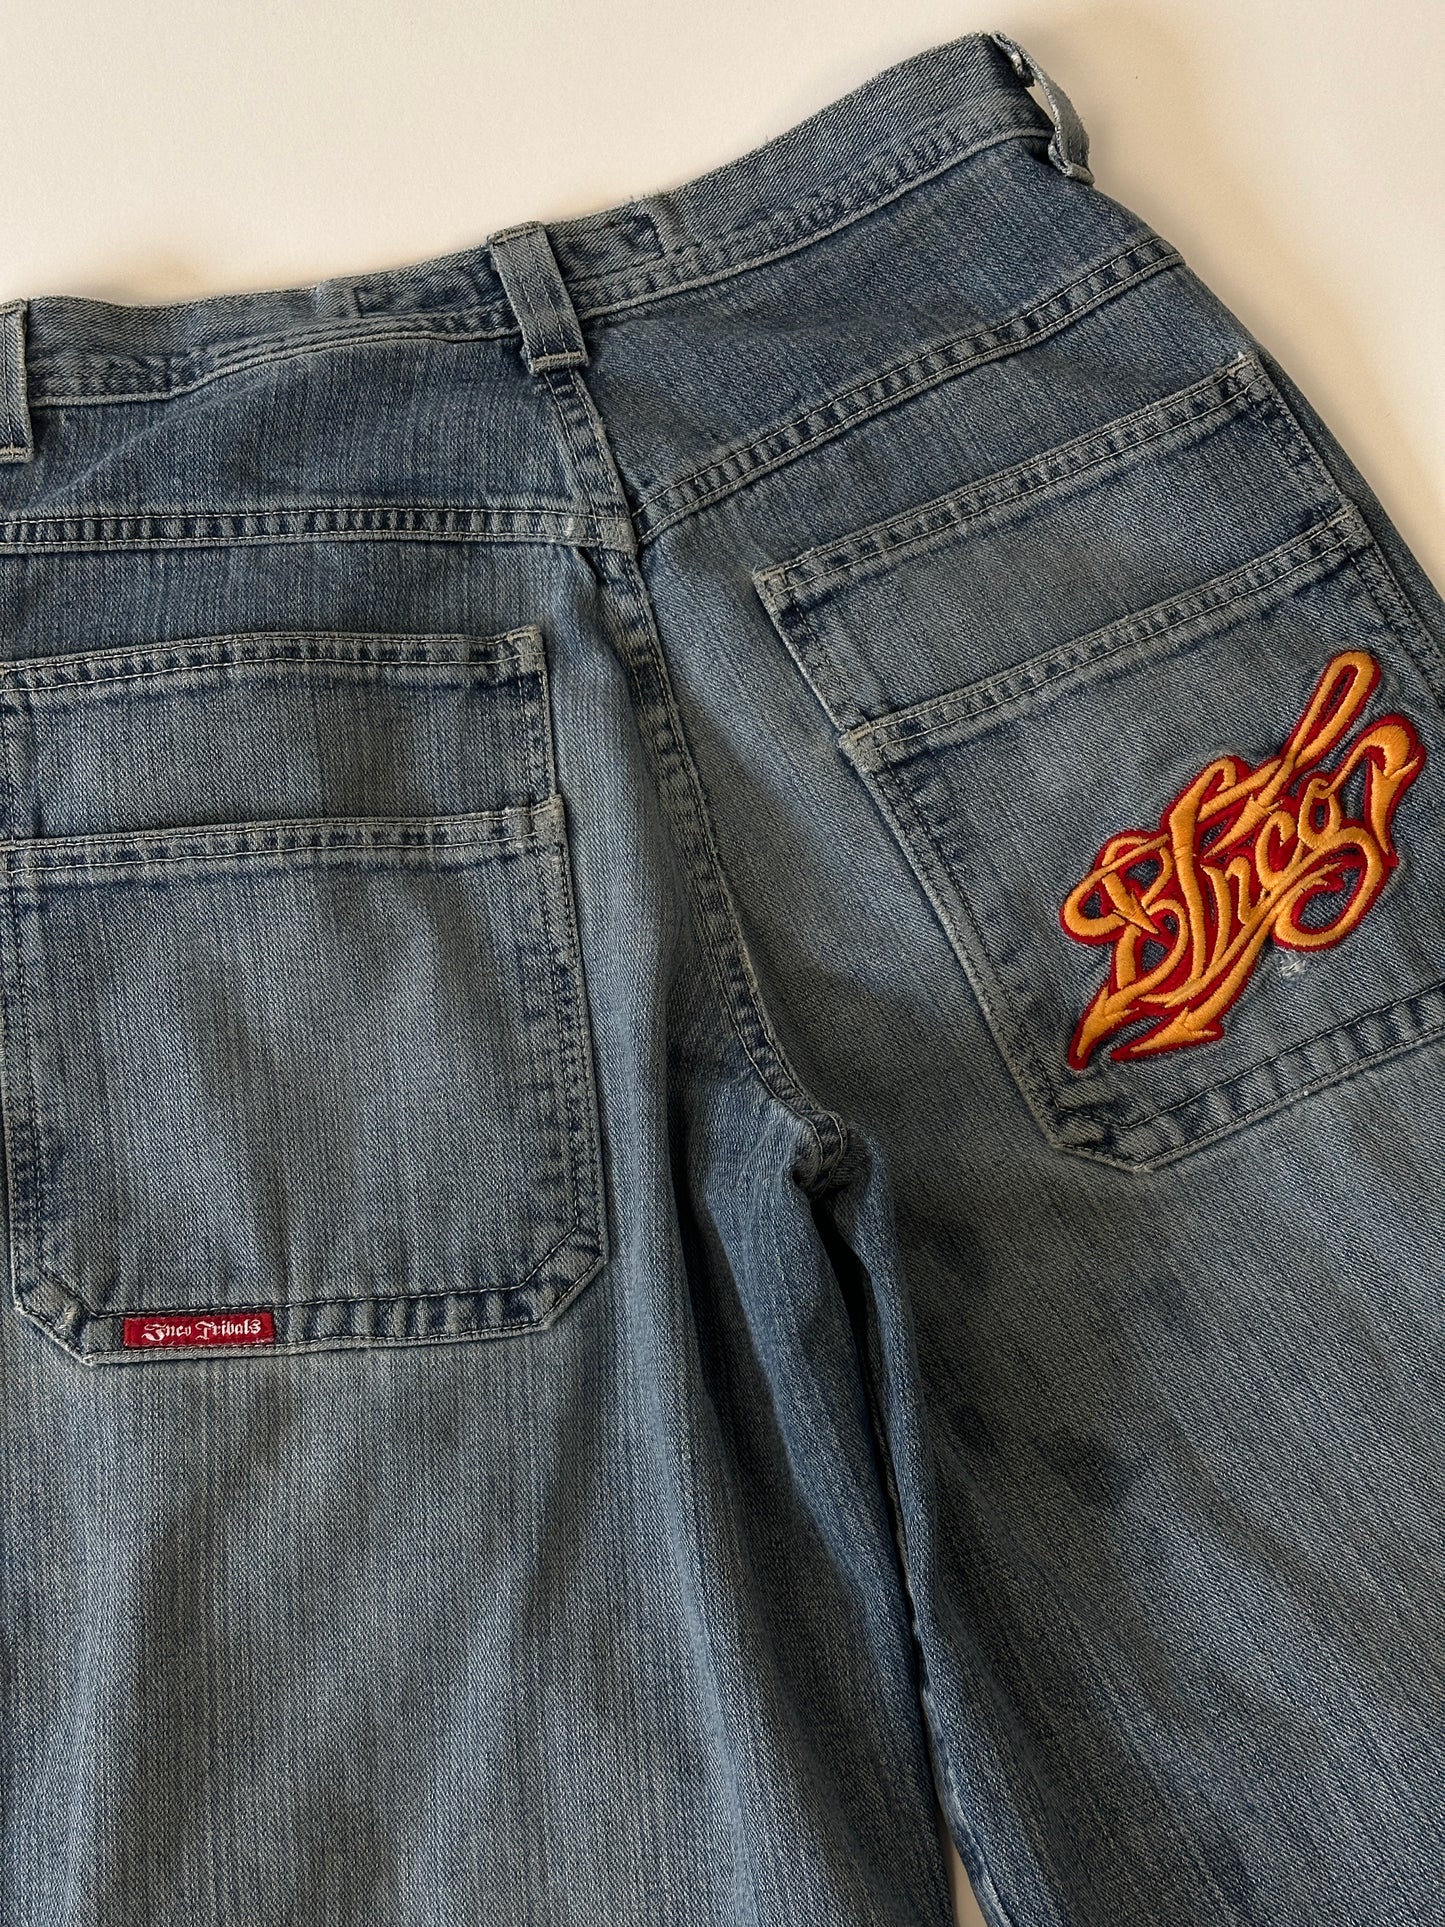 JNCO Graffiti Logo Vintage Baggy Shorts - 33